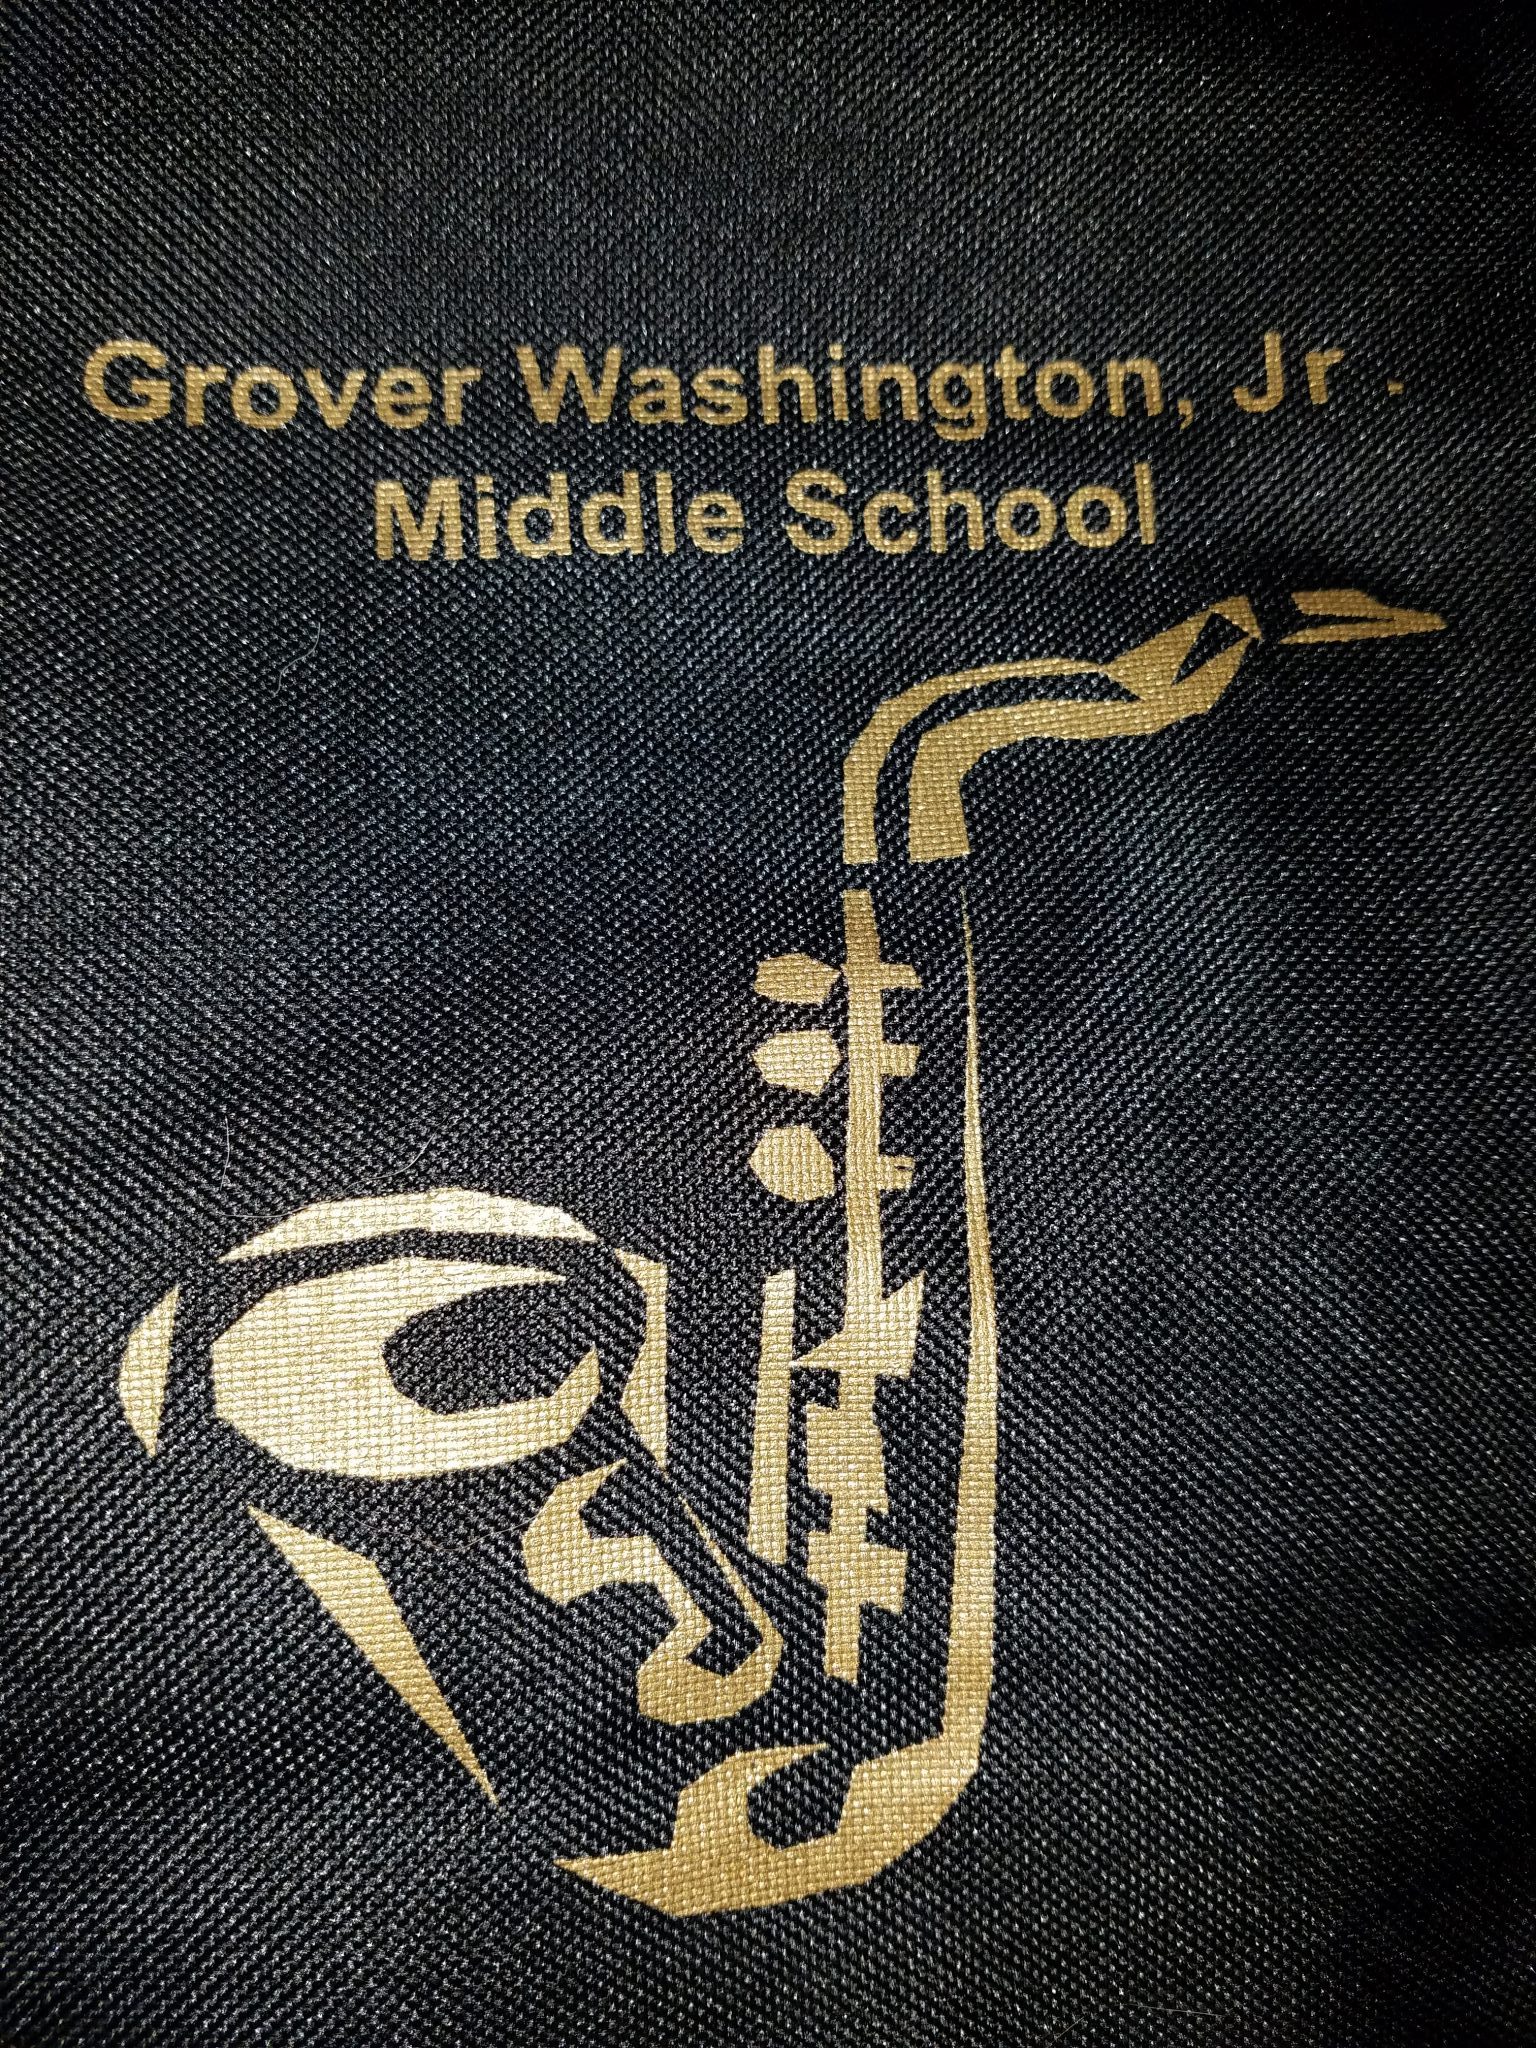 Grover Washington, Jr. Middle School